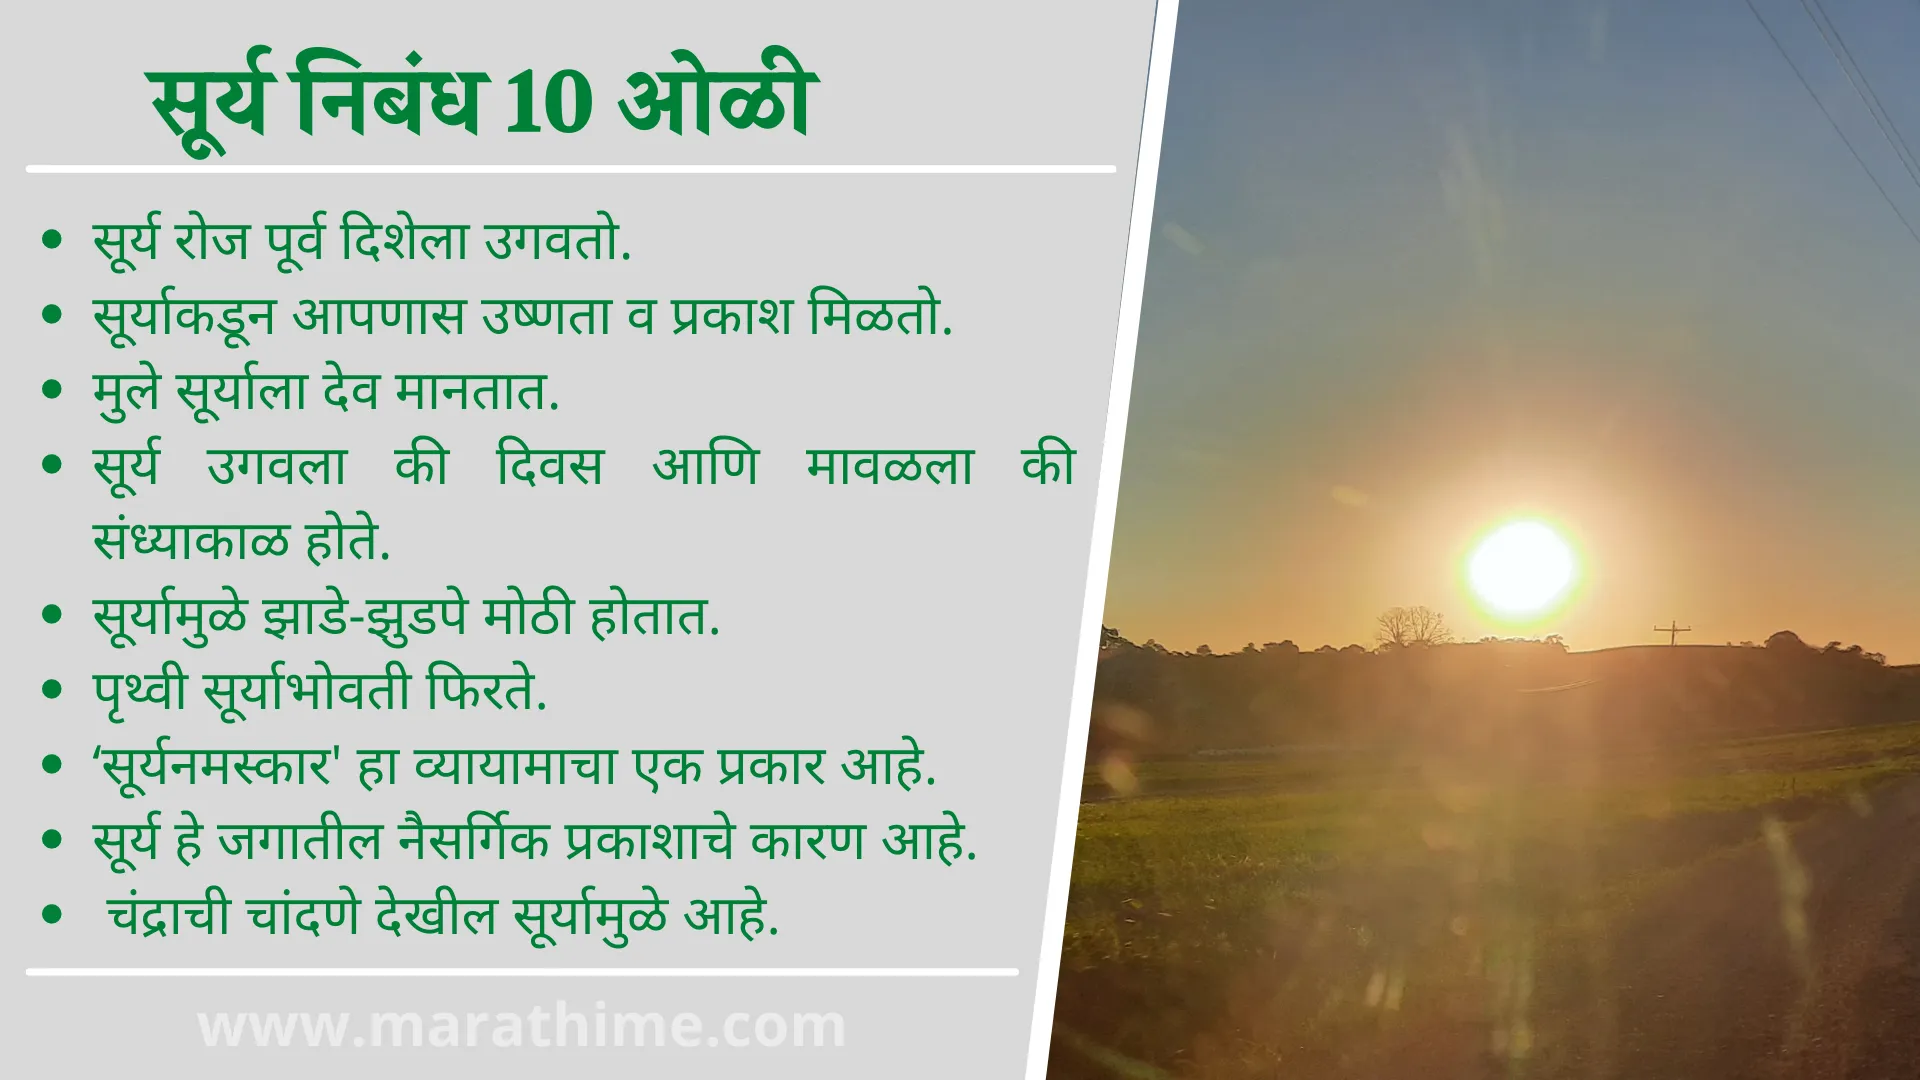 सूर्य निबंध 10 ओळी, 10 Lines On Sun in Marathi